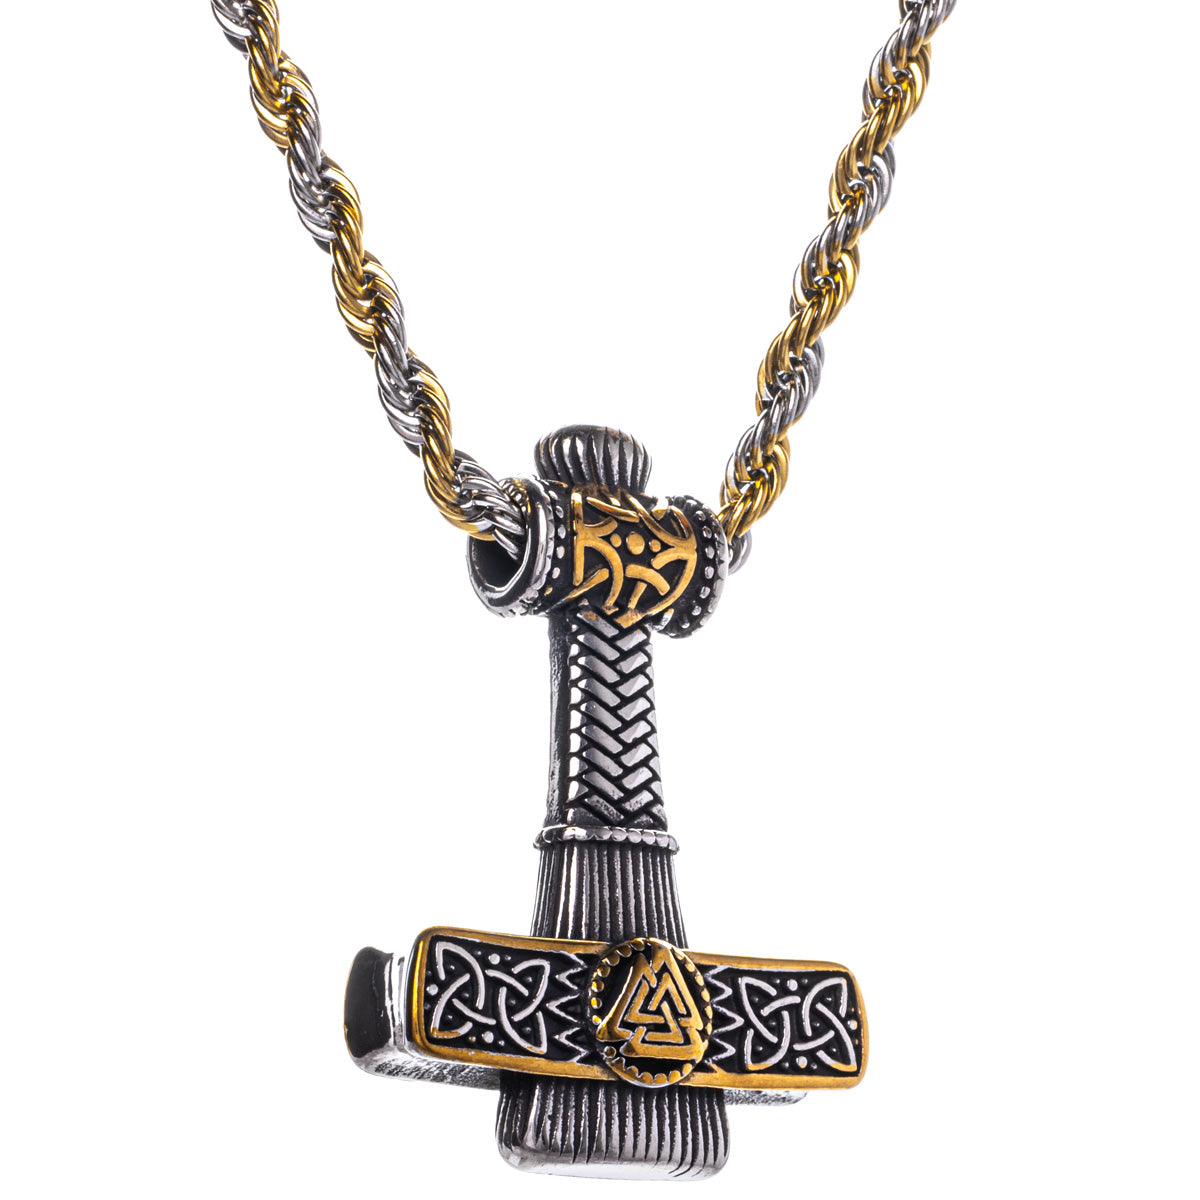 Two-tone Thor's hammer Mjölnir pendant necklace with Aegishjalmur symbol (Steel 316L)